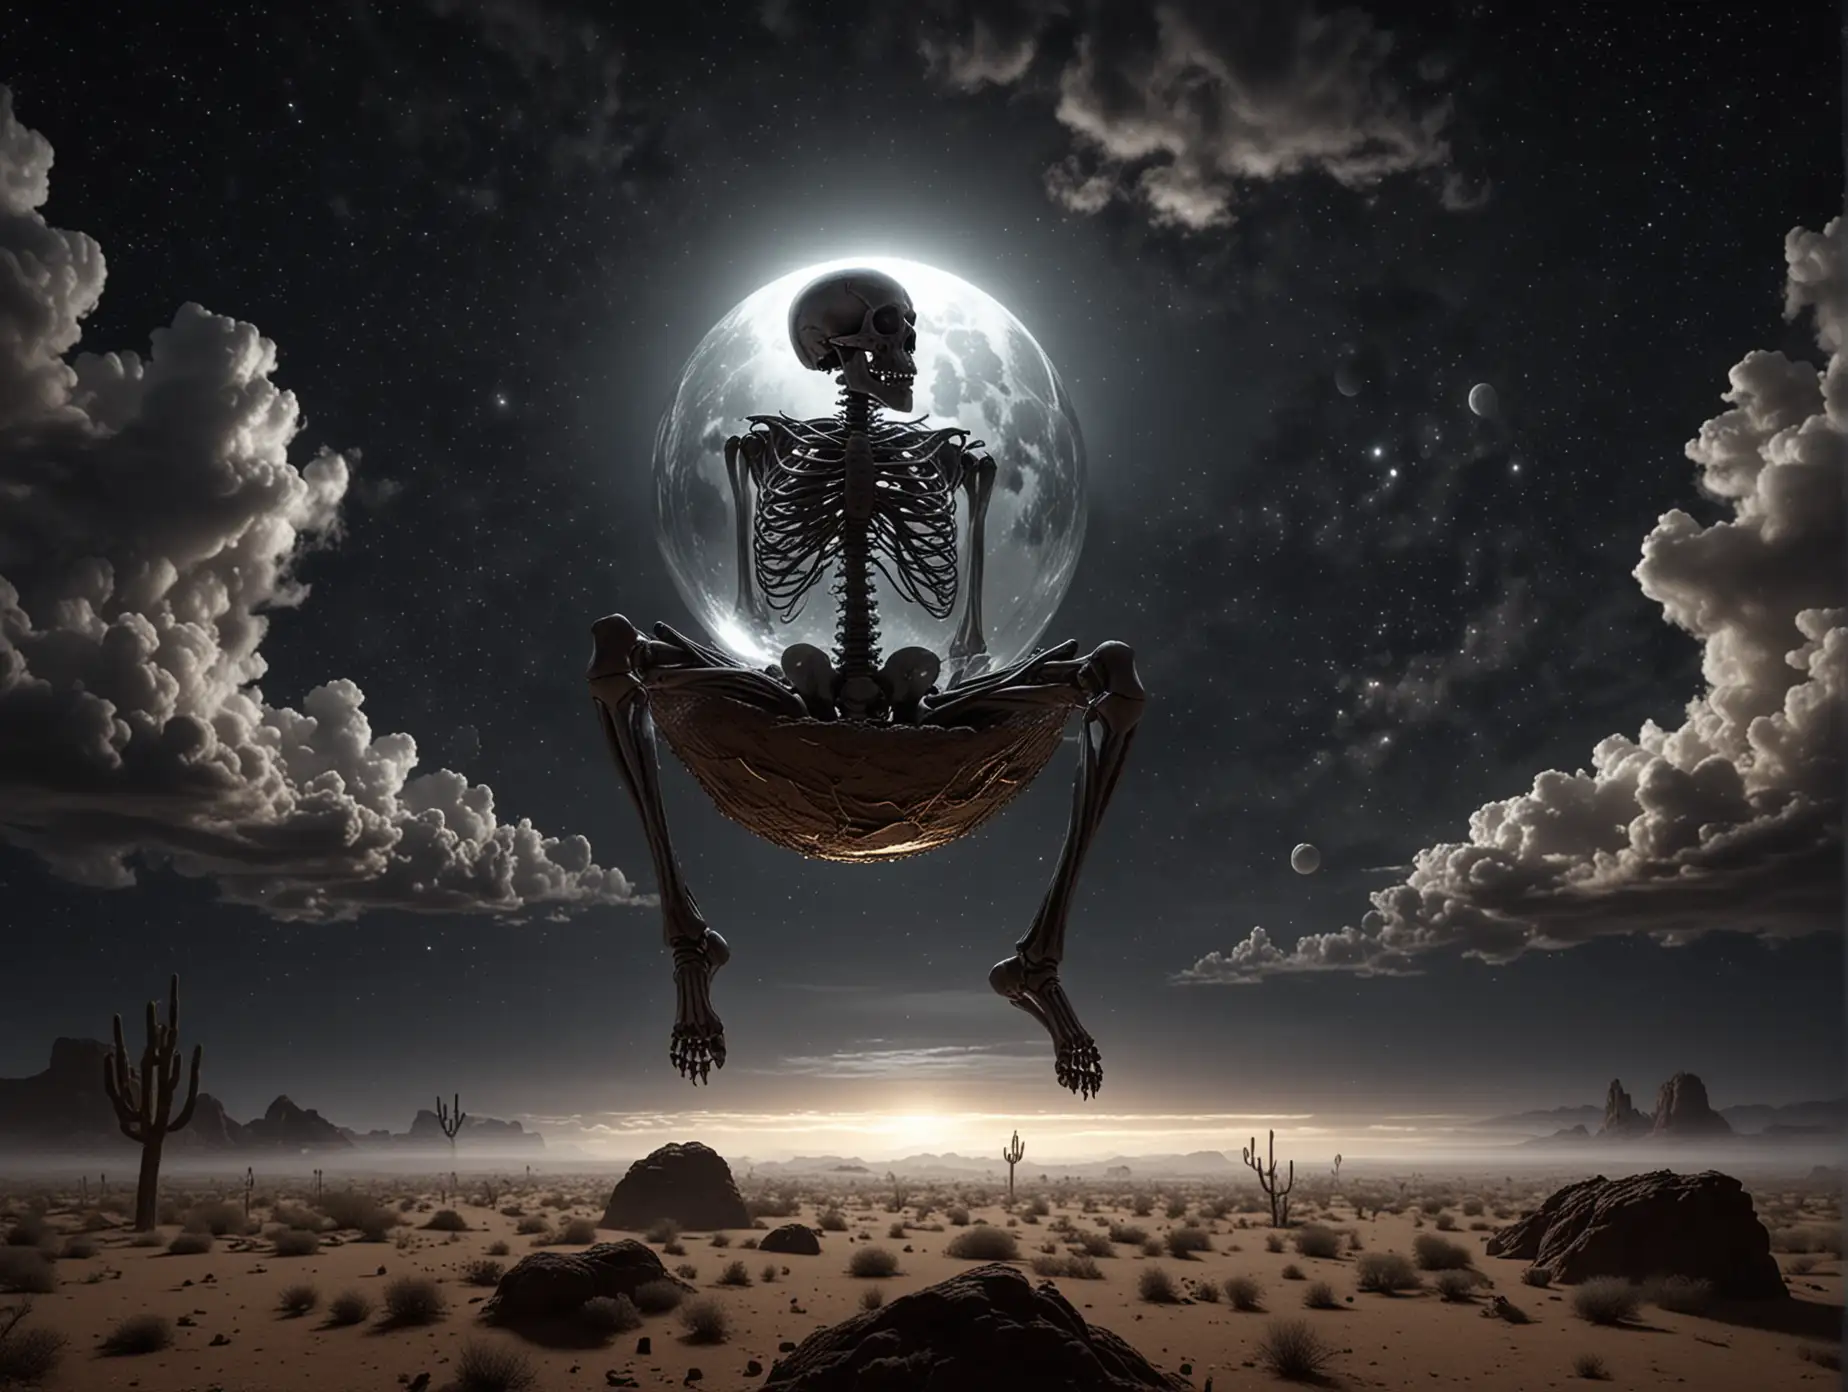 Ethereal Skeleton Flight Over Sonoran Desert Night Skies